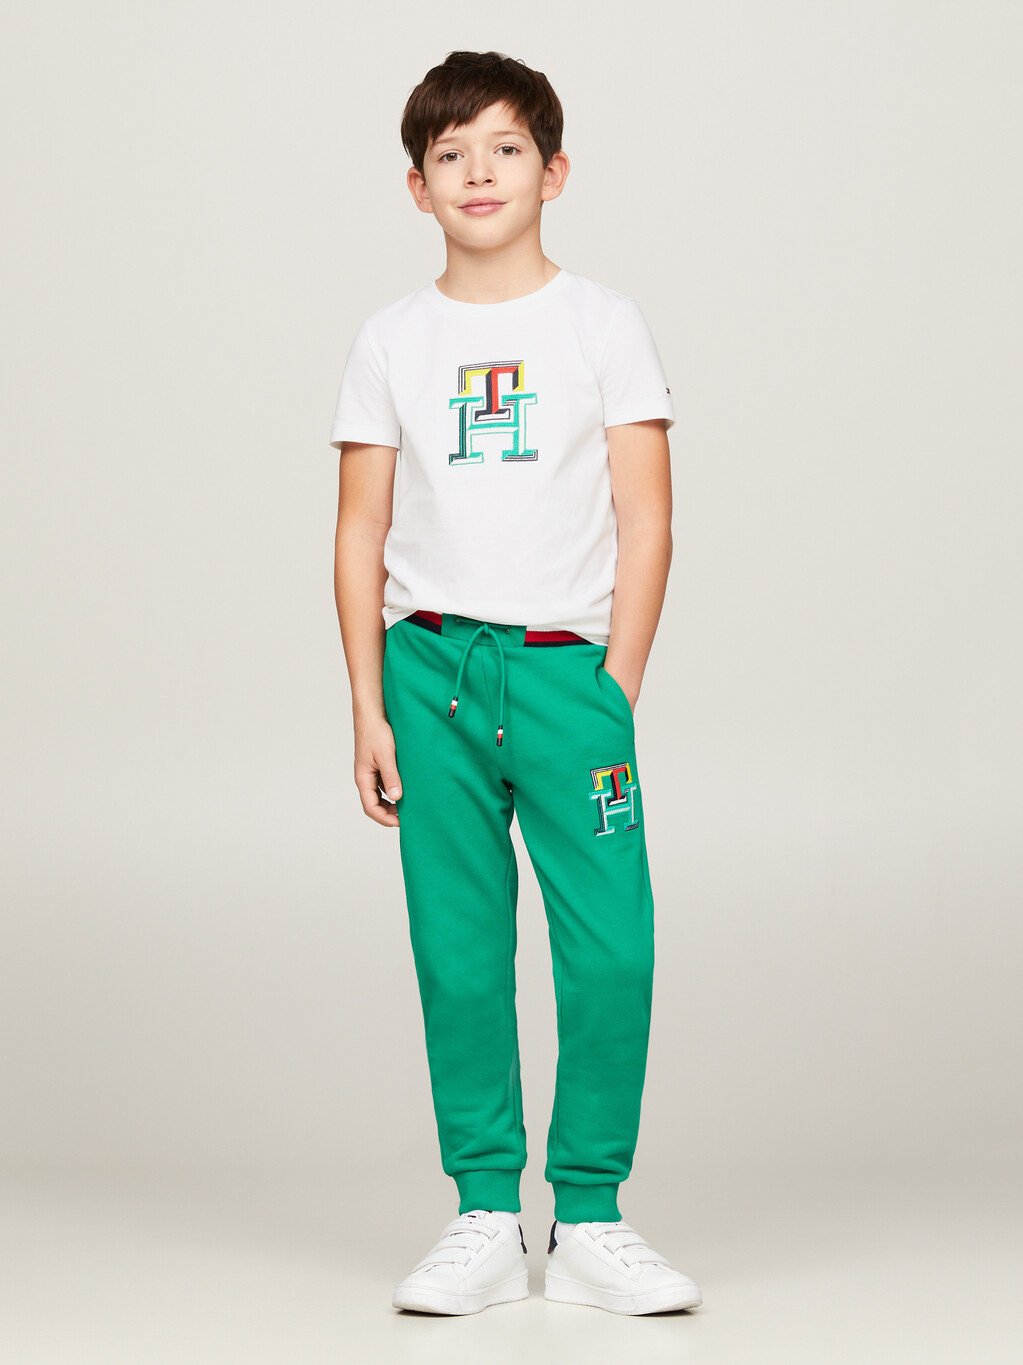 TH Monogram Multicolour Embroidery T-Shirt, White, hi-res